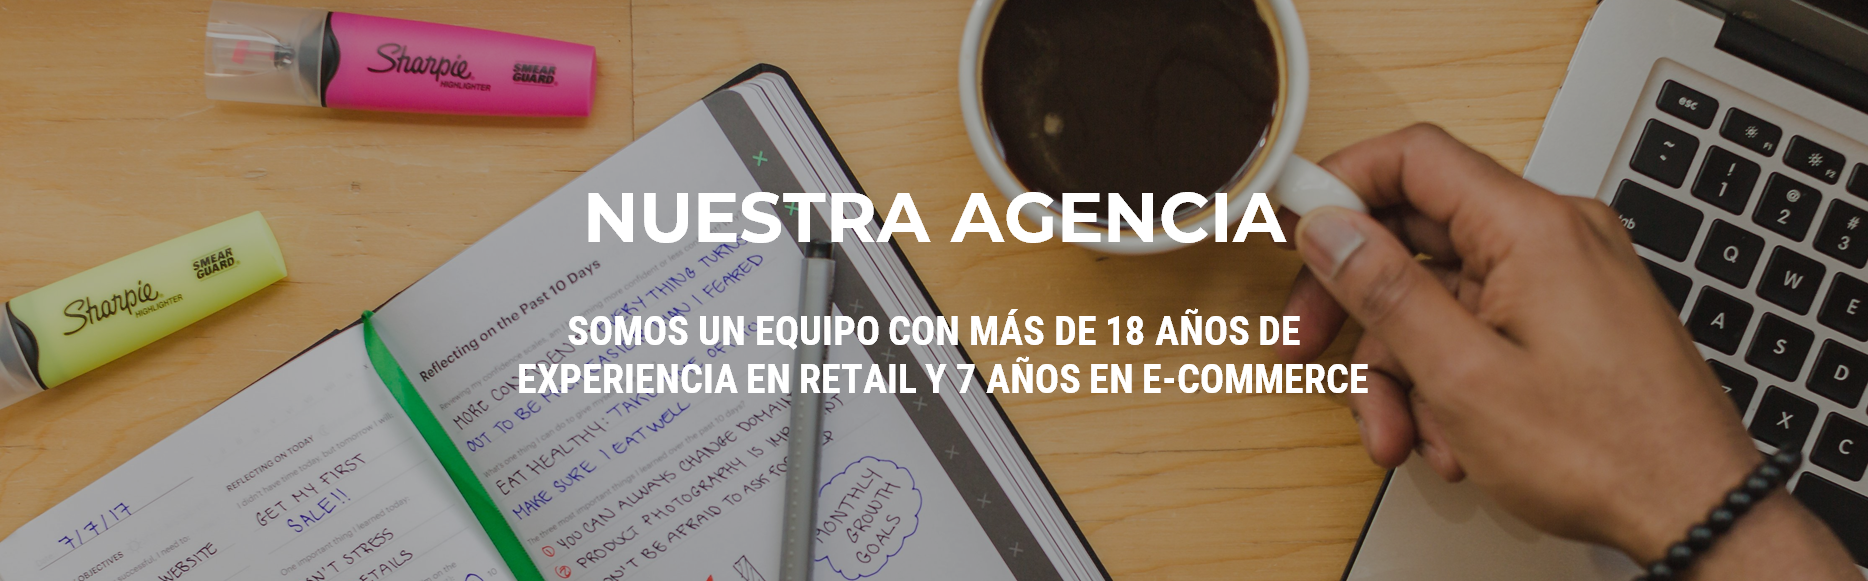 Moxie: Agencia ecommerce Shopify Partner en Colombia